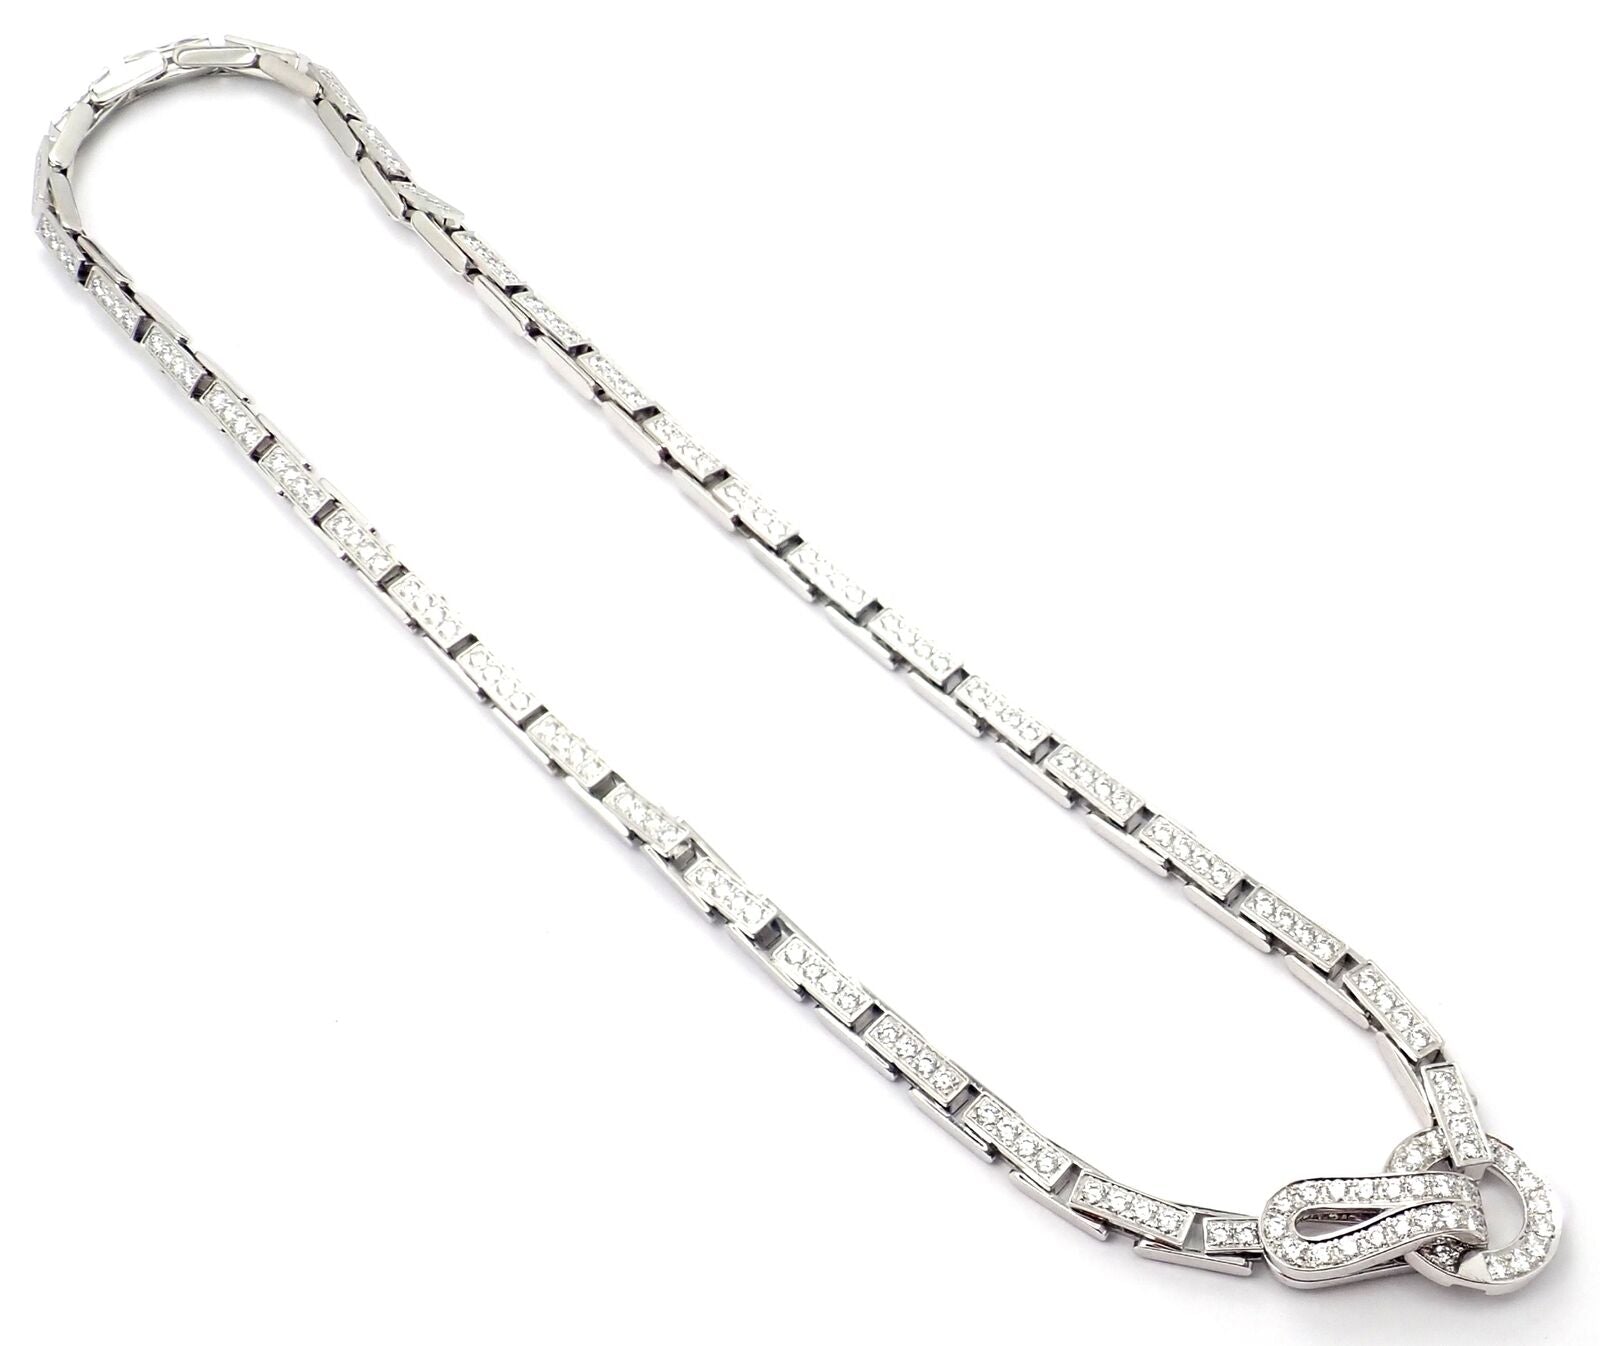 Cartier 18K Rose Gold AGRAFE Diamond Necklace